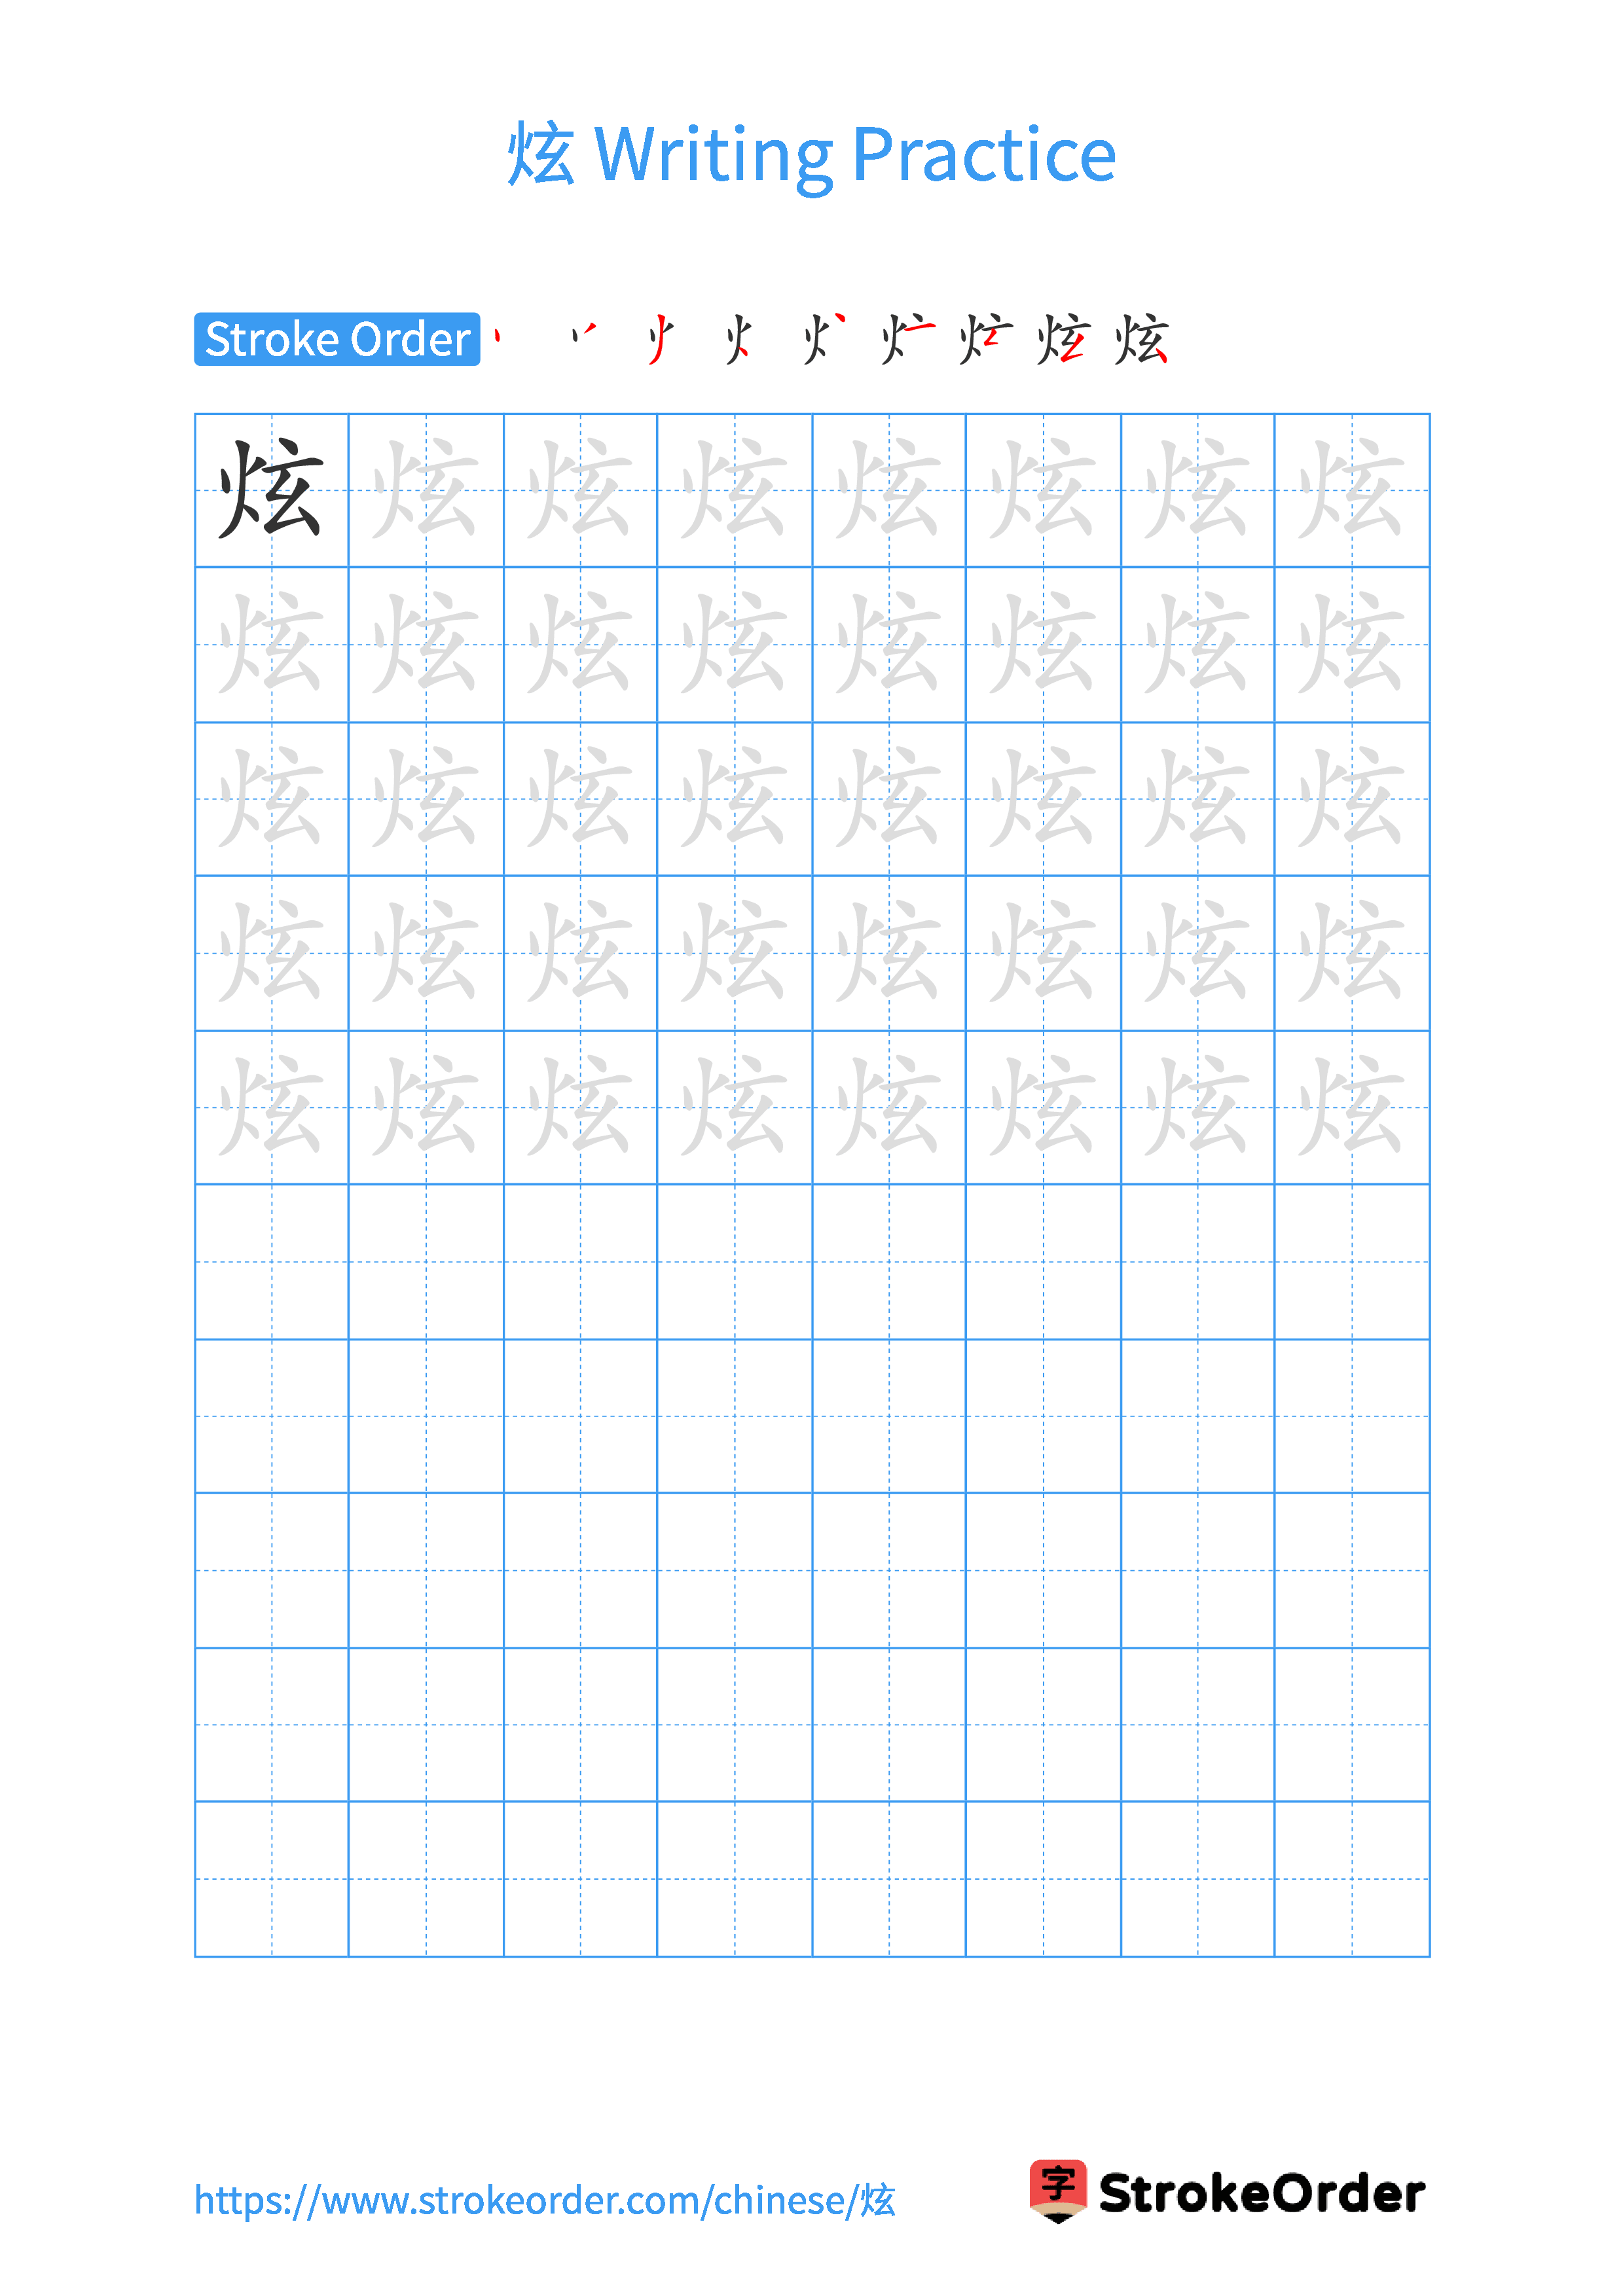 Printable Handwriting Practice Worksheet of the Chinese character 炫 in Portrait Orientation (Tian Zi Ge)